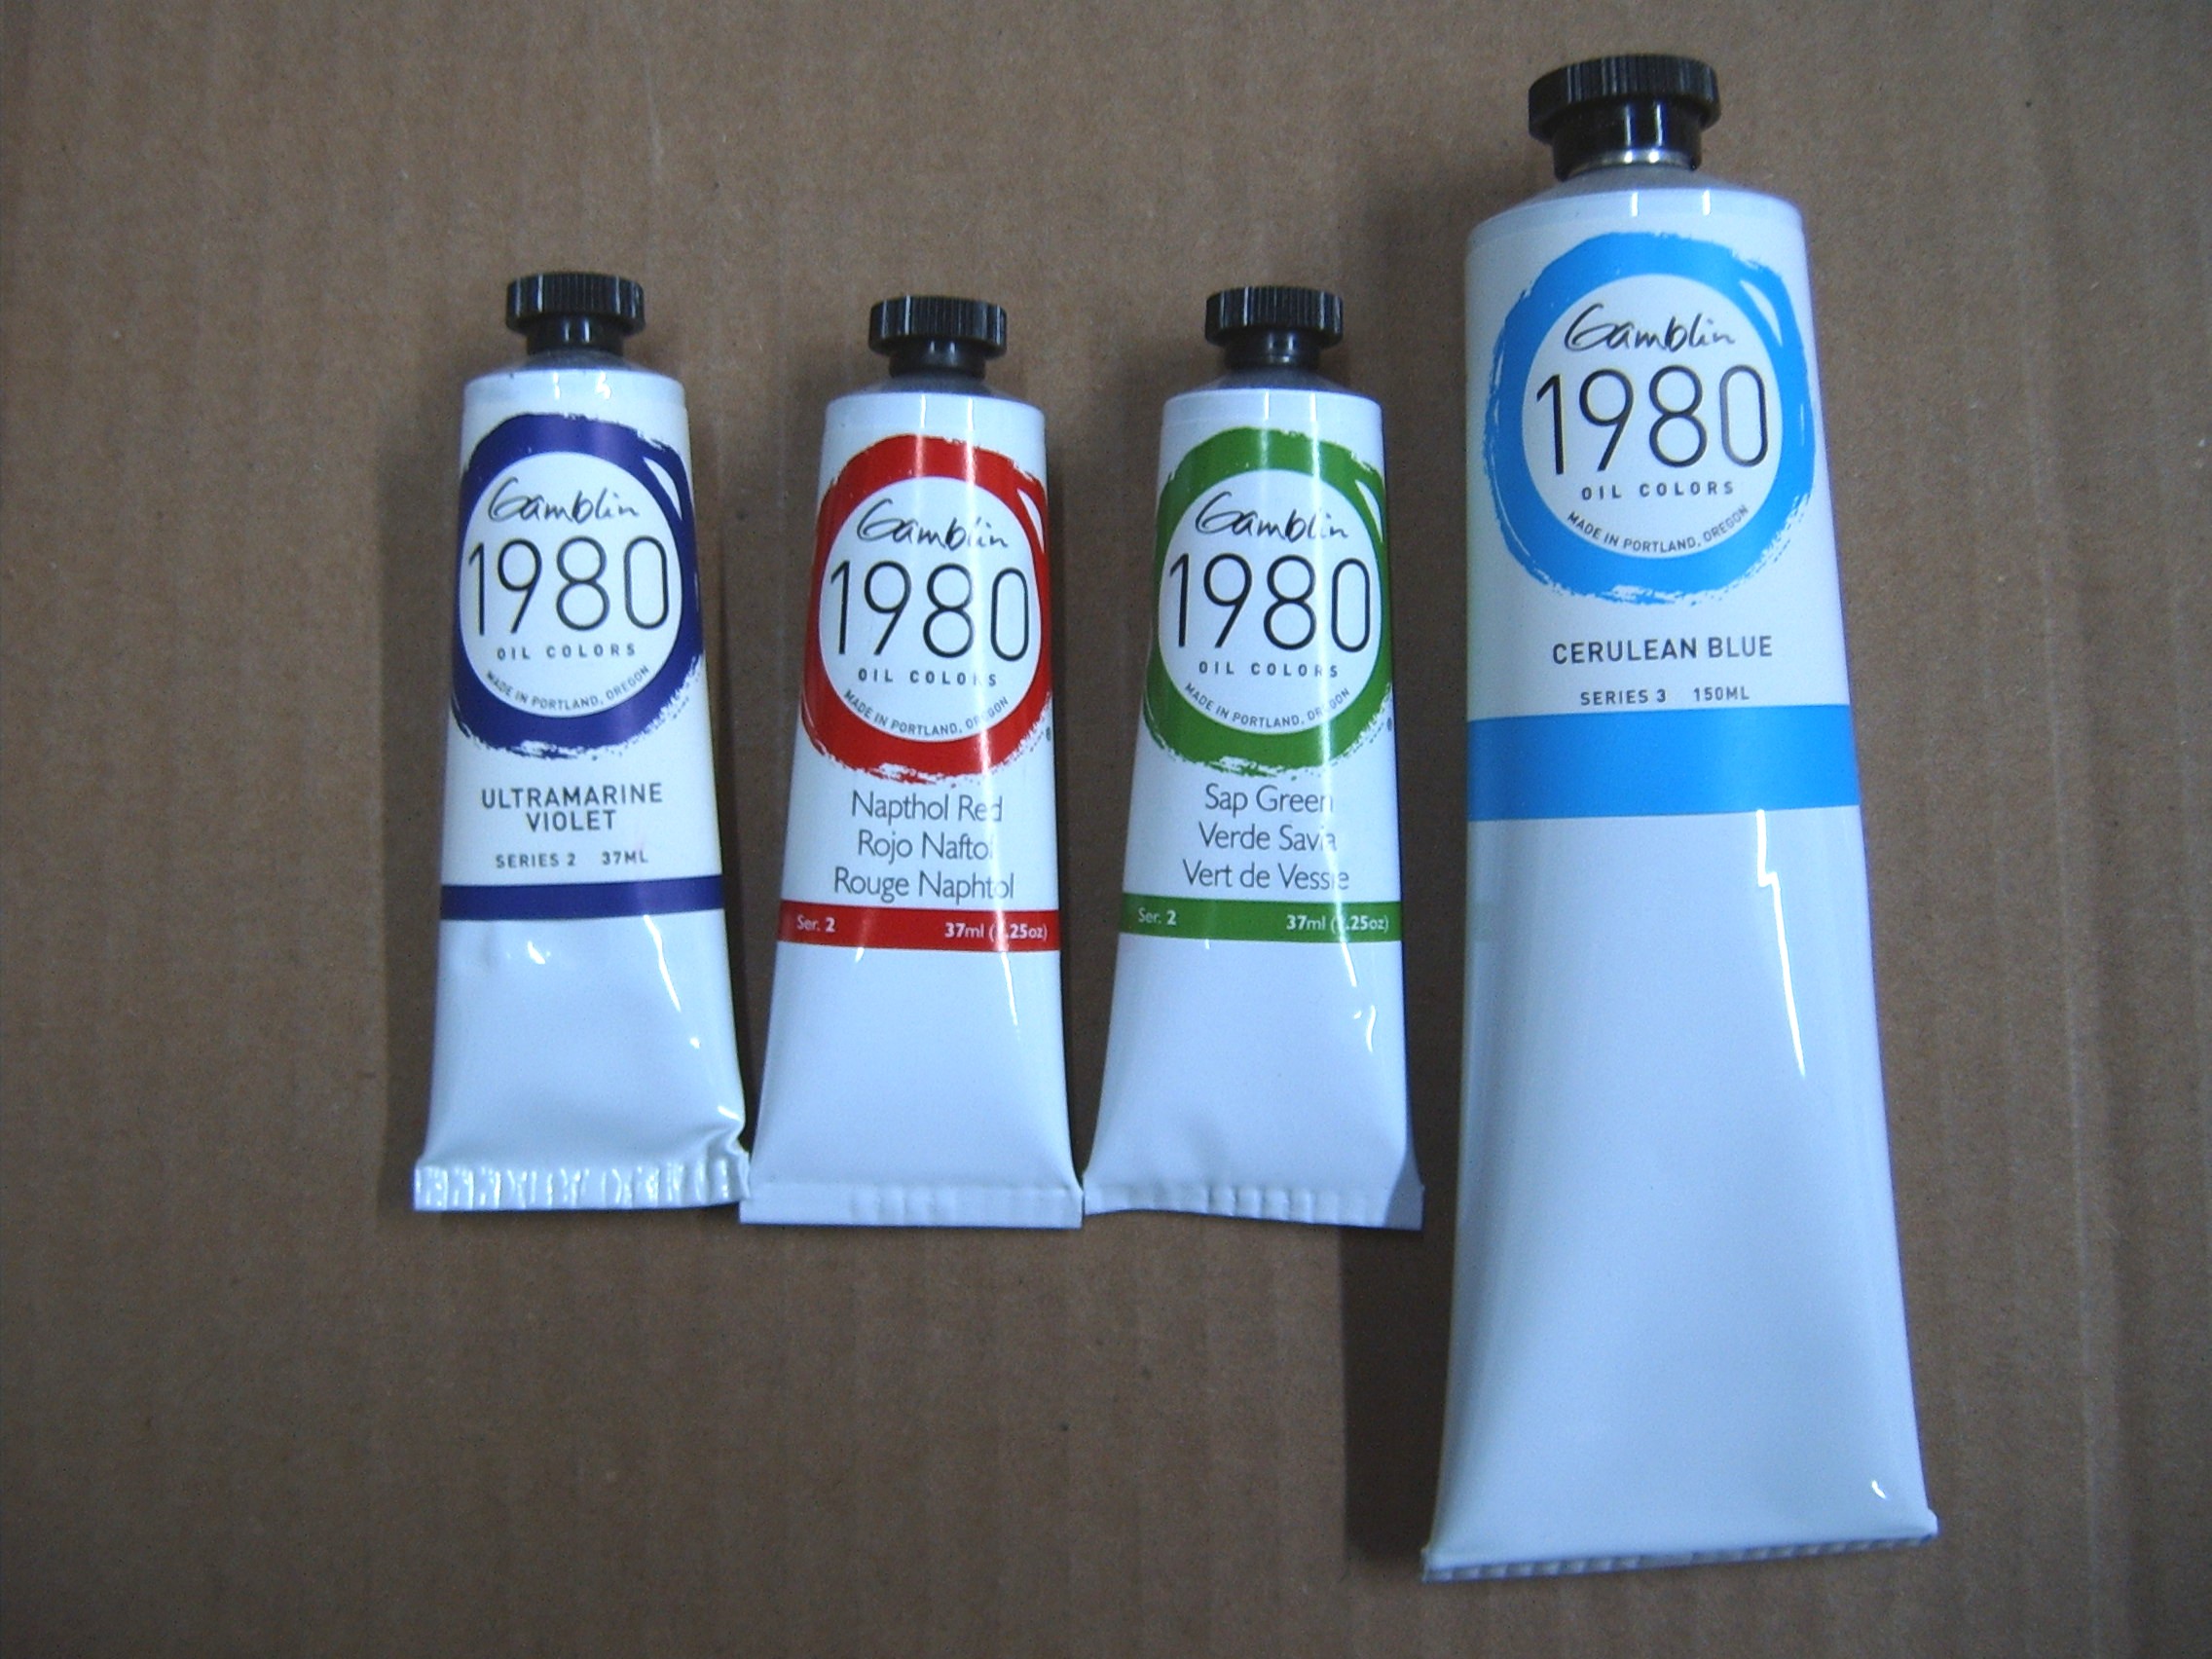 Gamblin 1980 oils